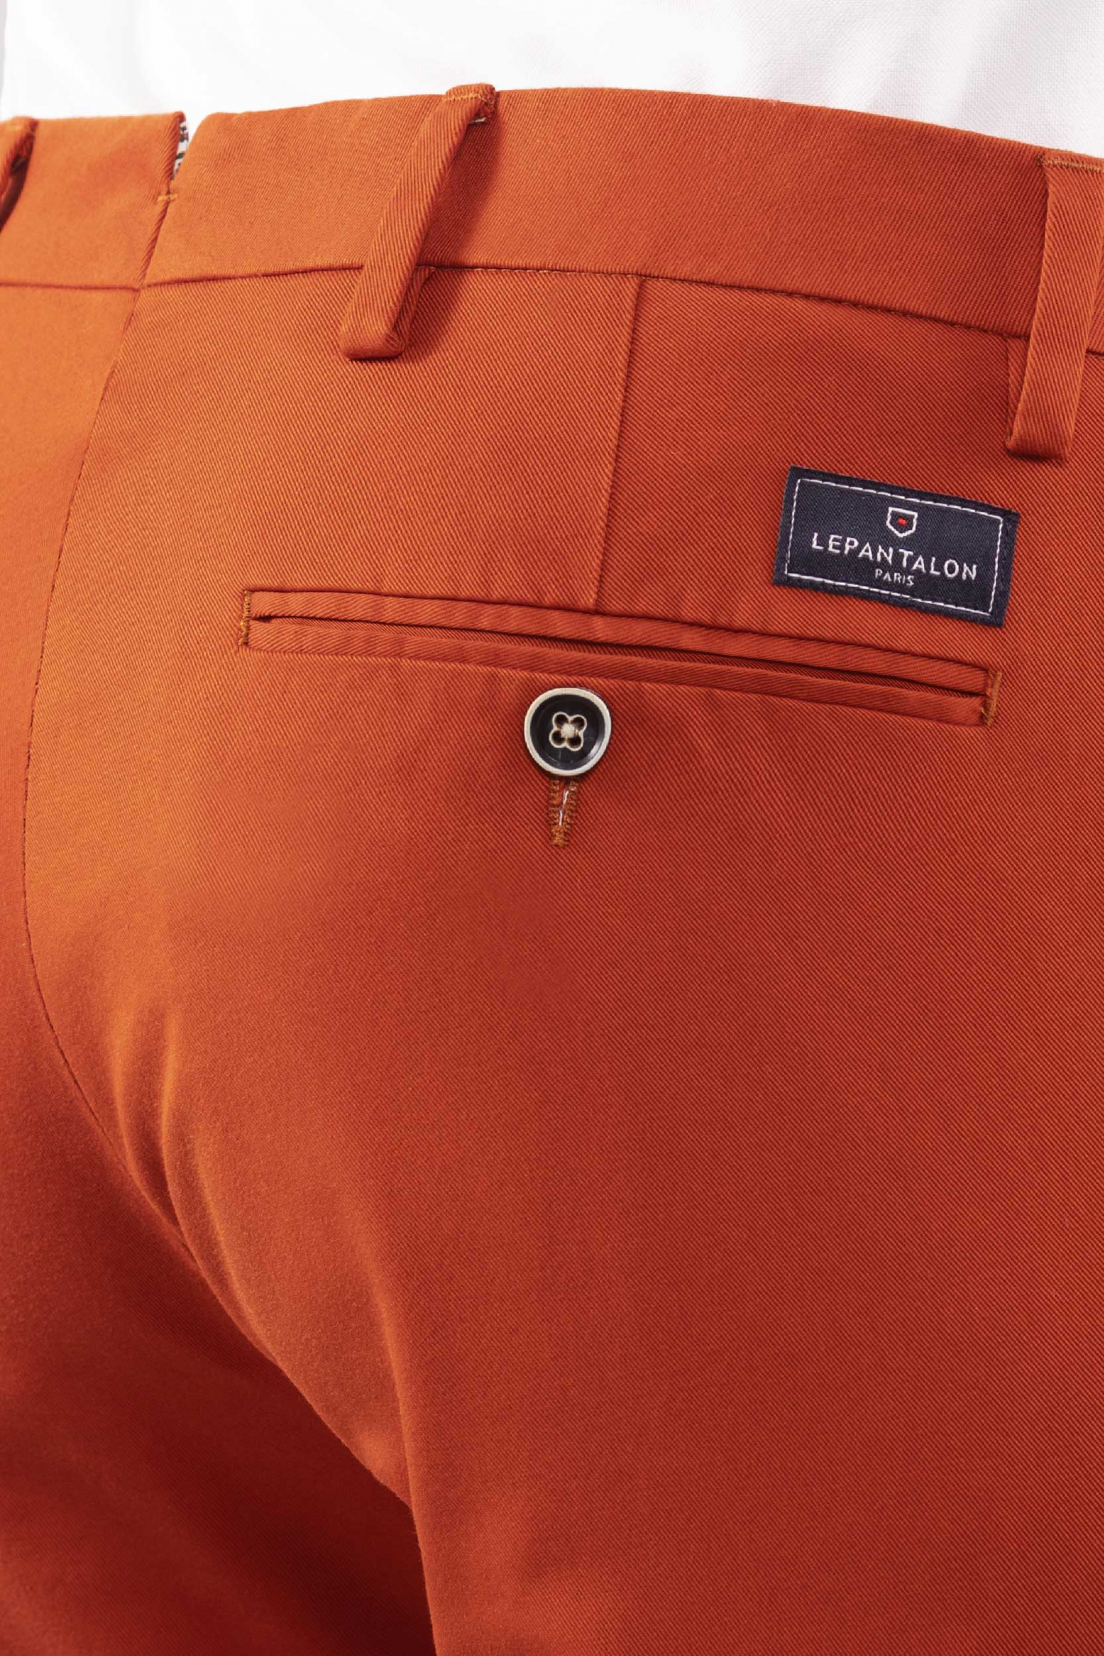 LePantalon: orange chinos trousers